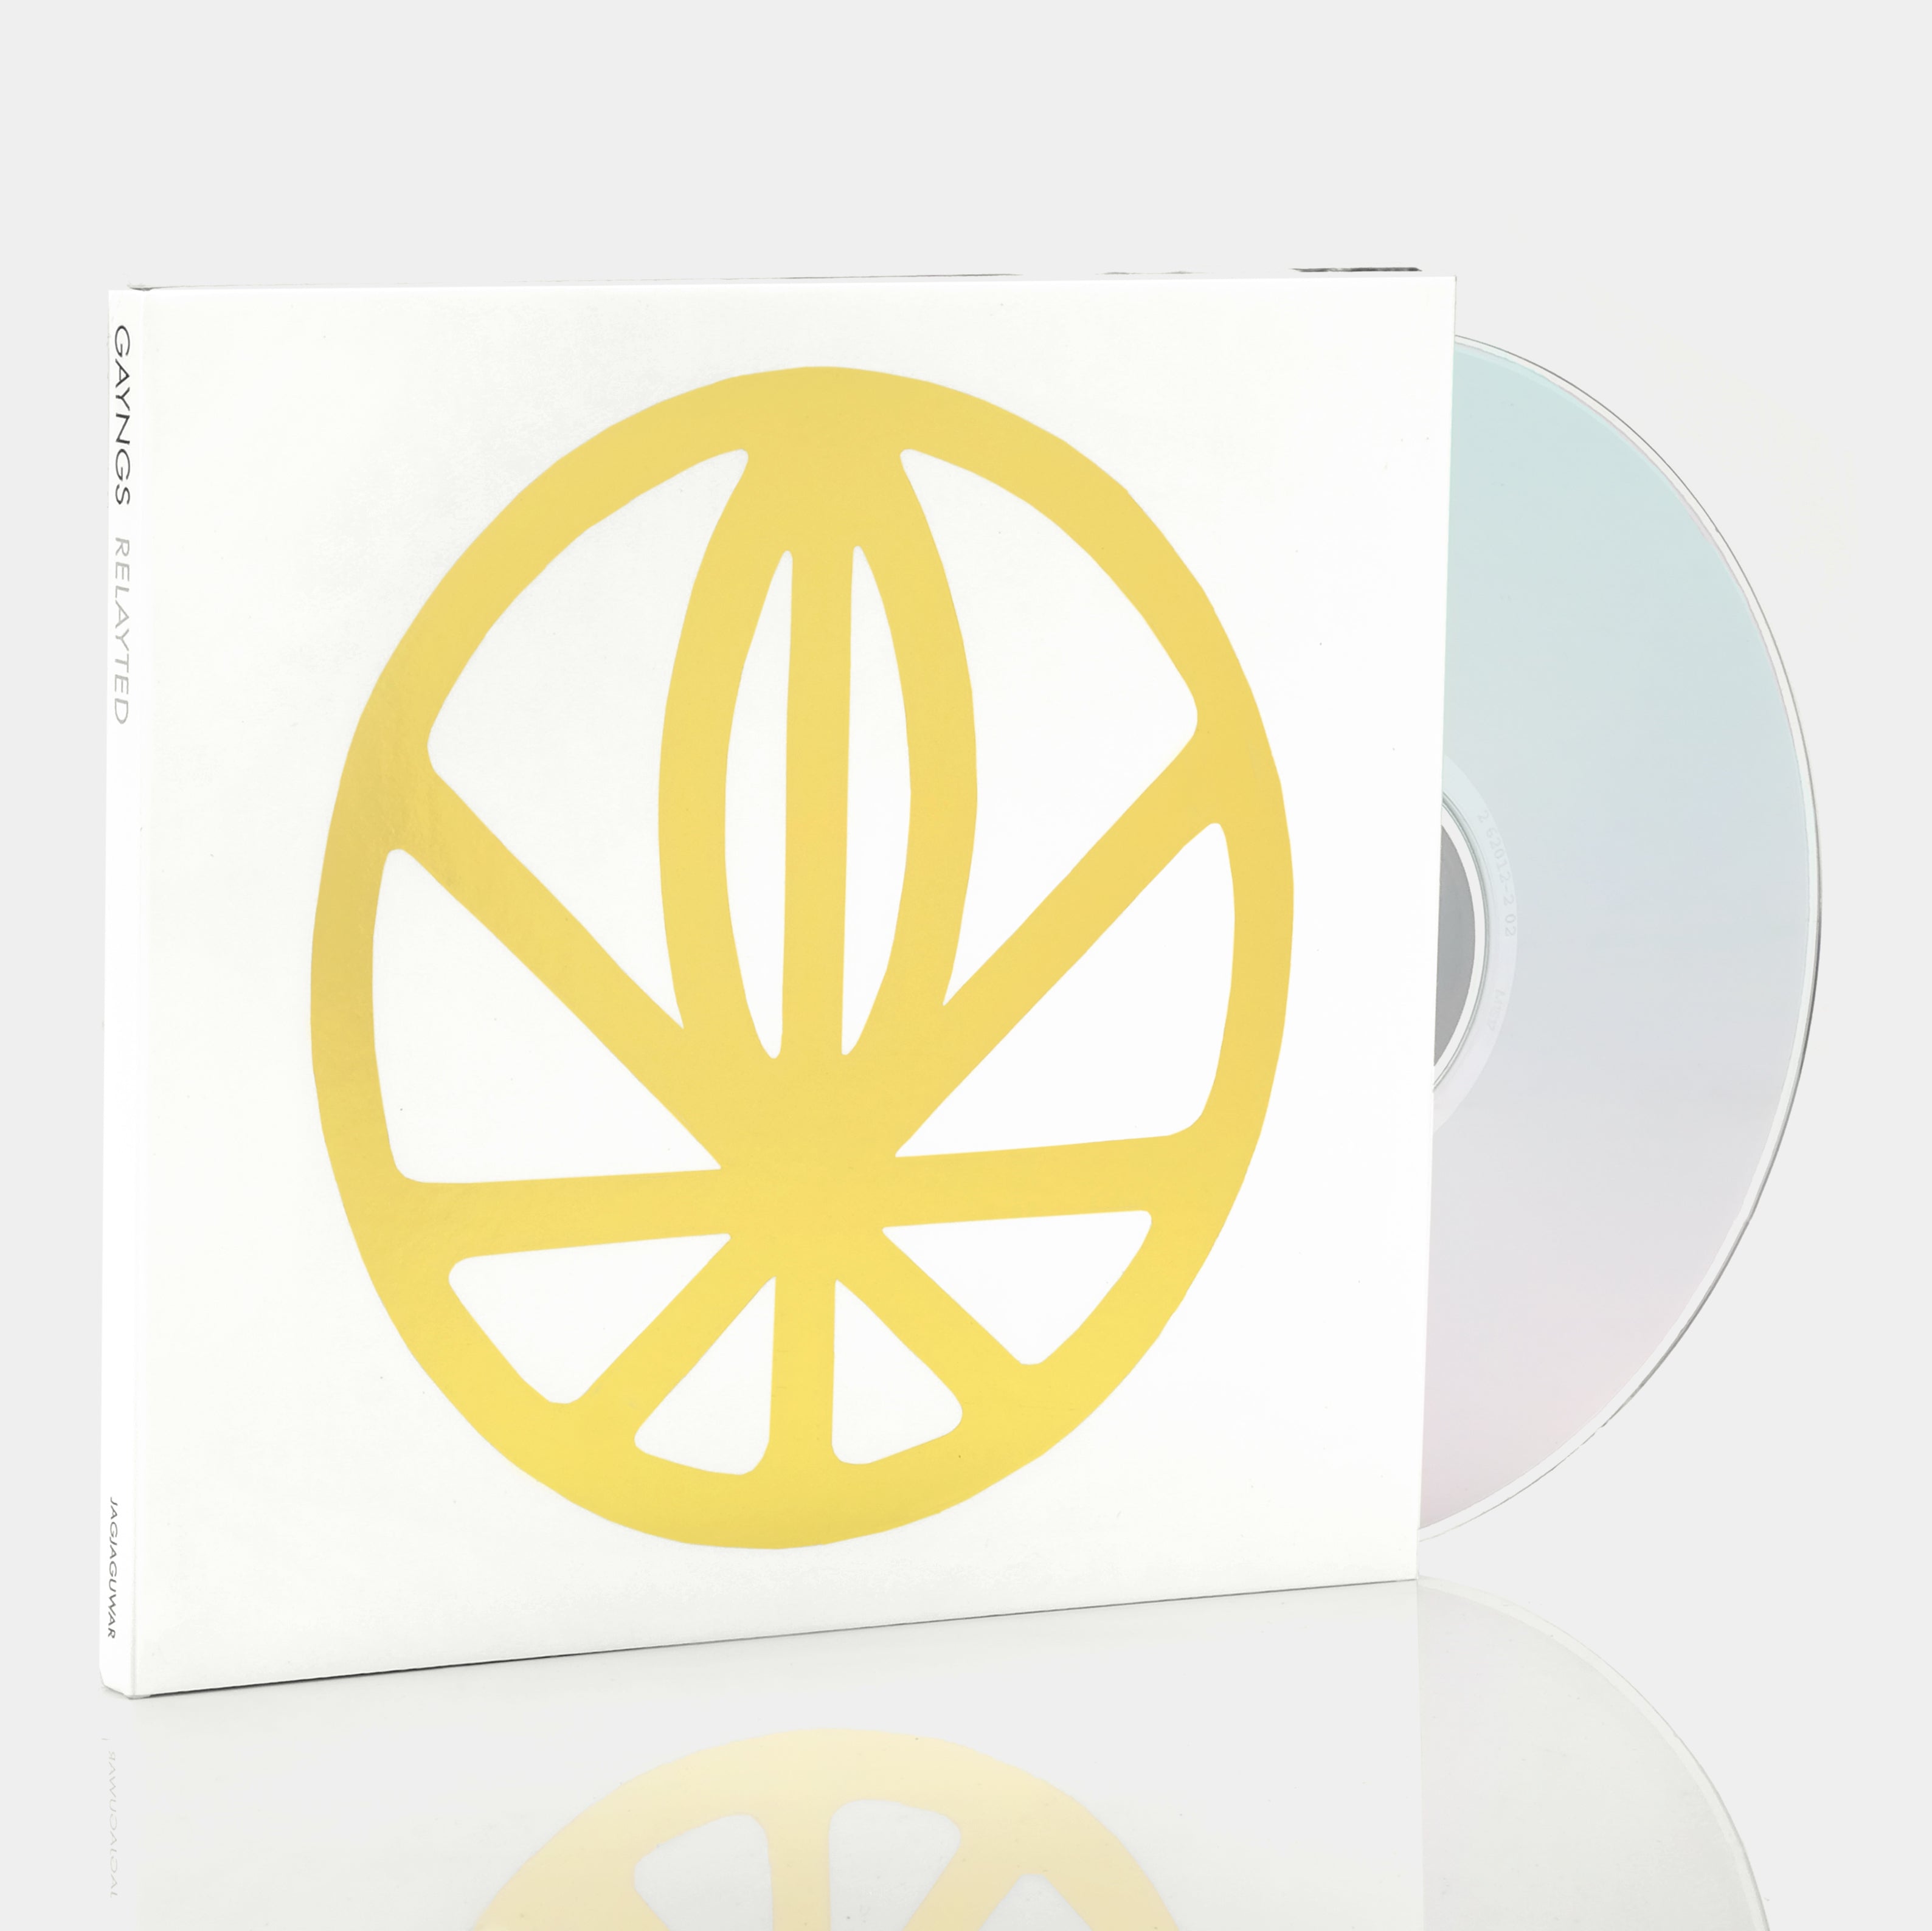 Marvin Gaye - Sexual Healing The Remixes LP RSD Red Smoke Vinyl